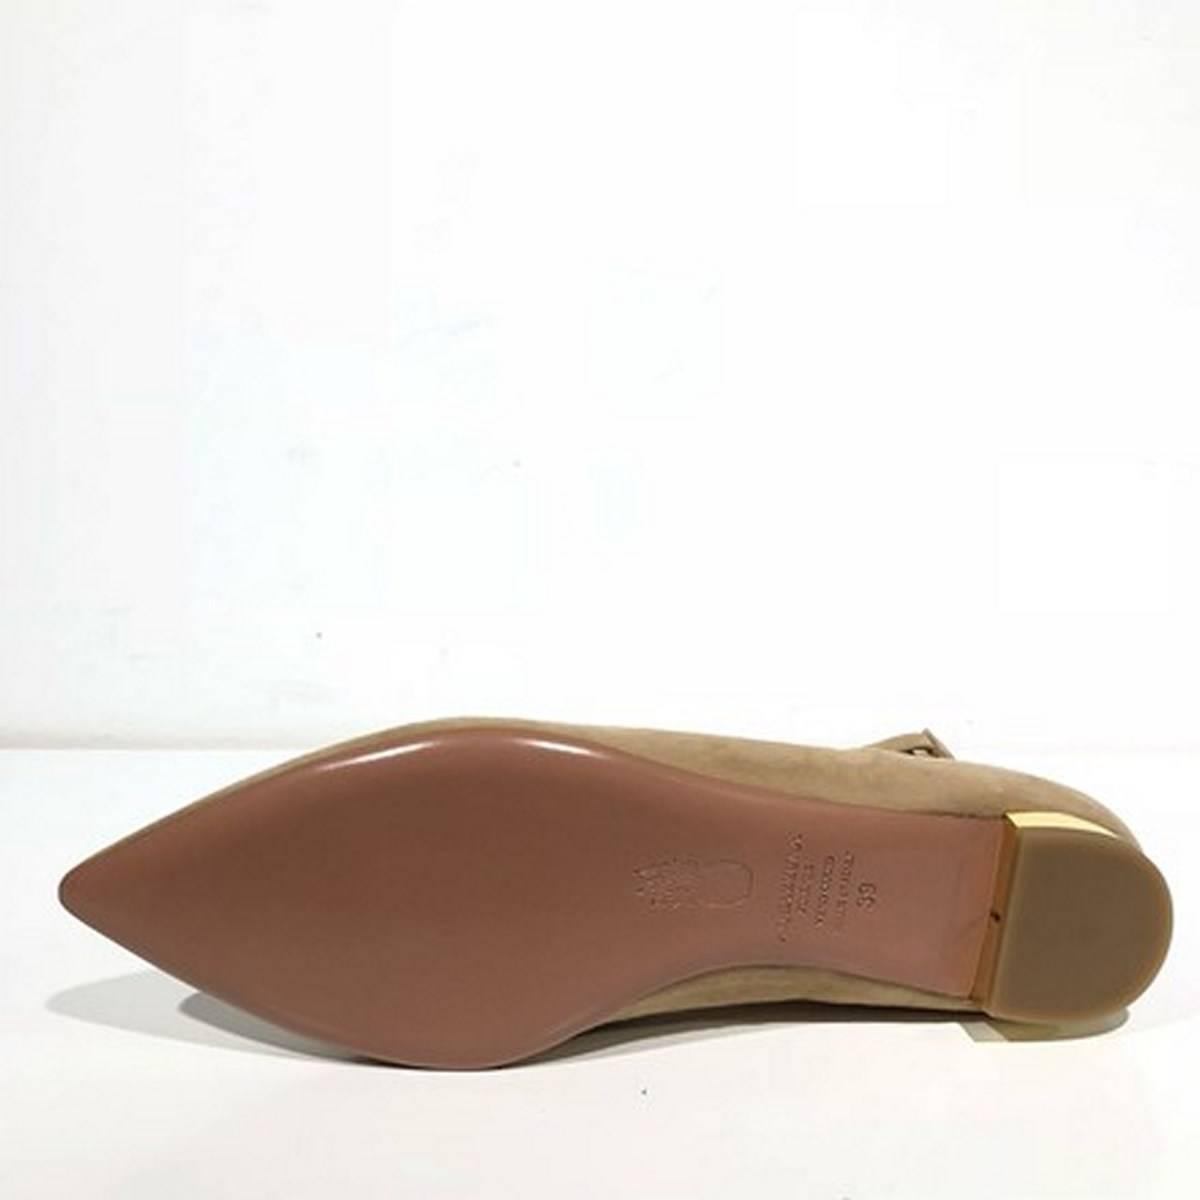 Aquazzura Nude Belgravia Suede Leather Flats (Size - EU 39) In New Condition For Sale In Los Angeles, CA